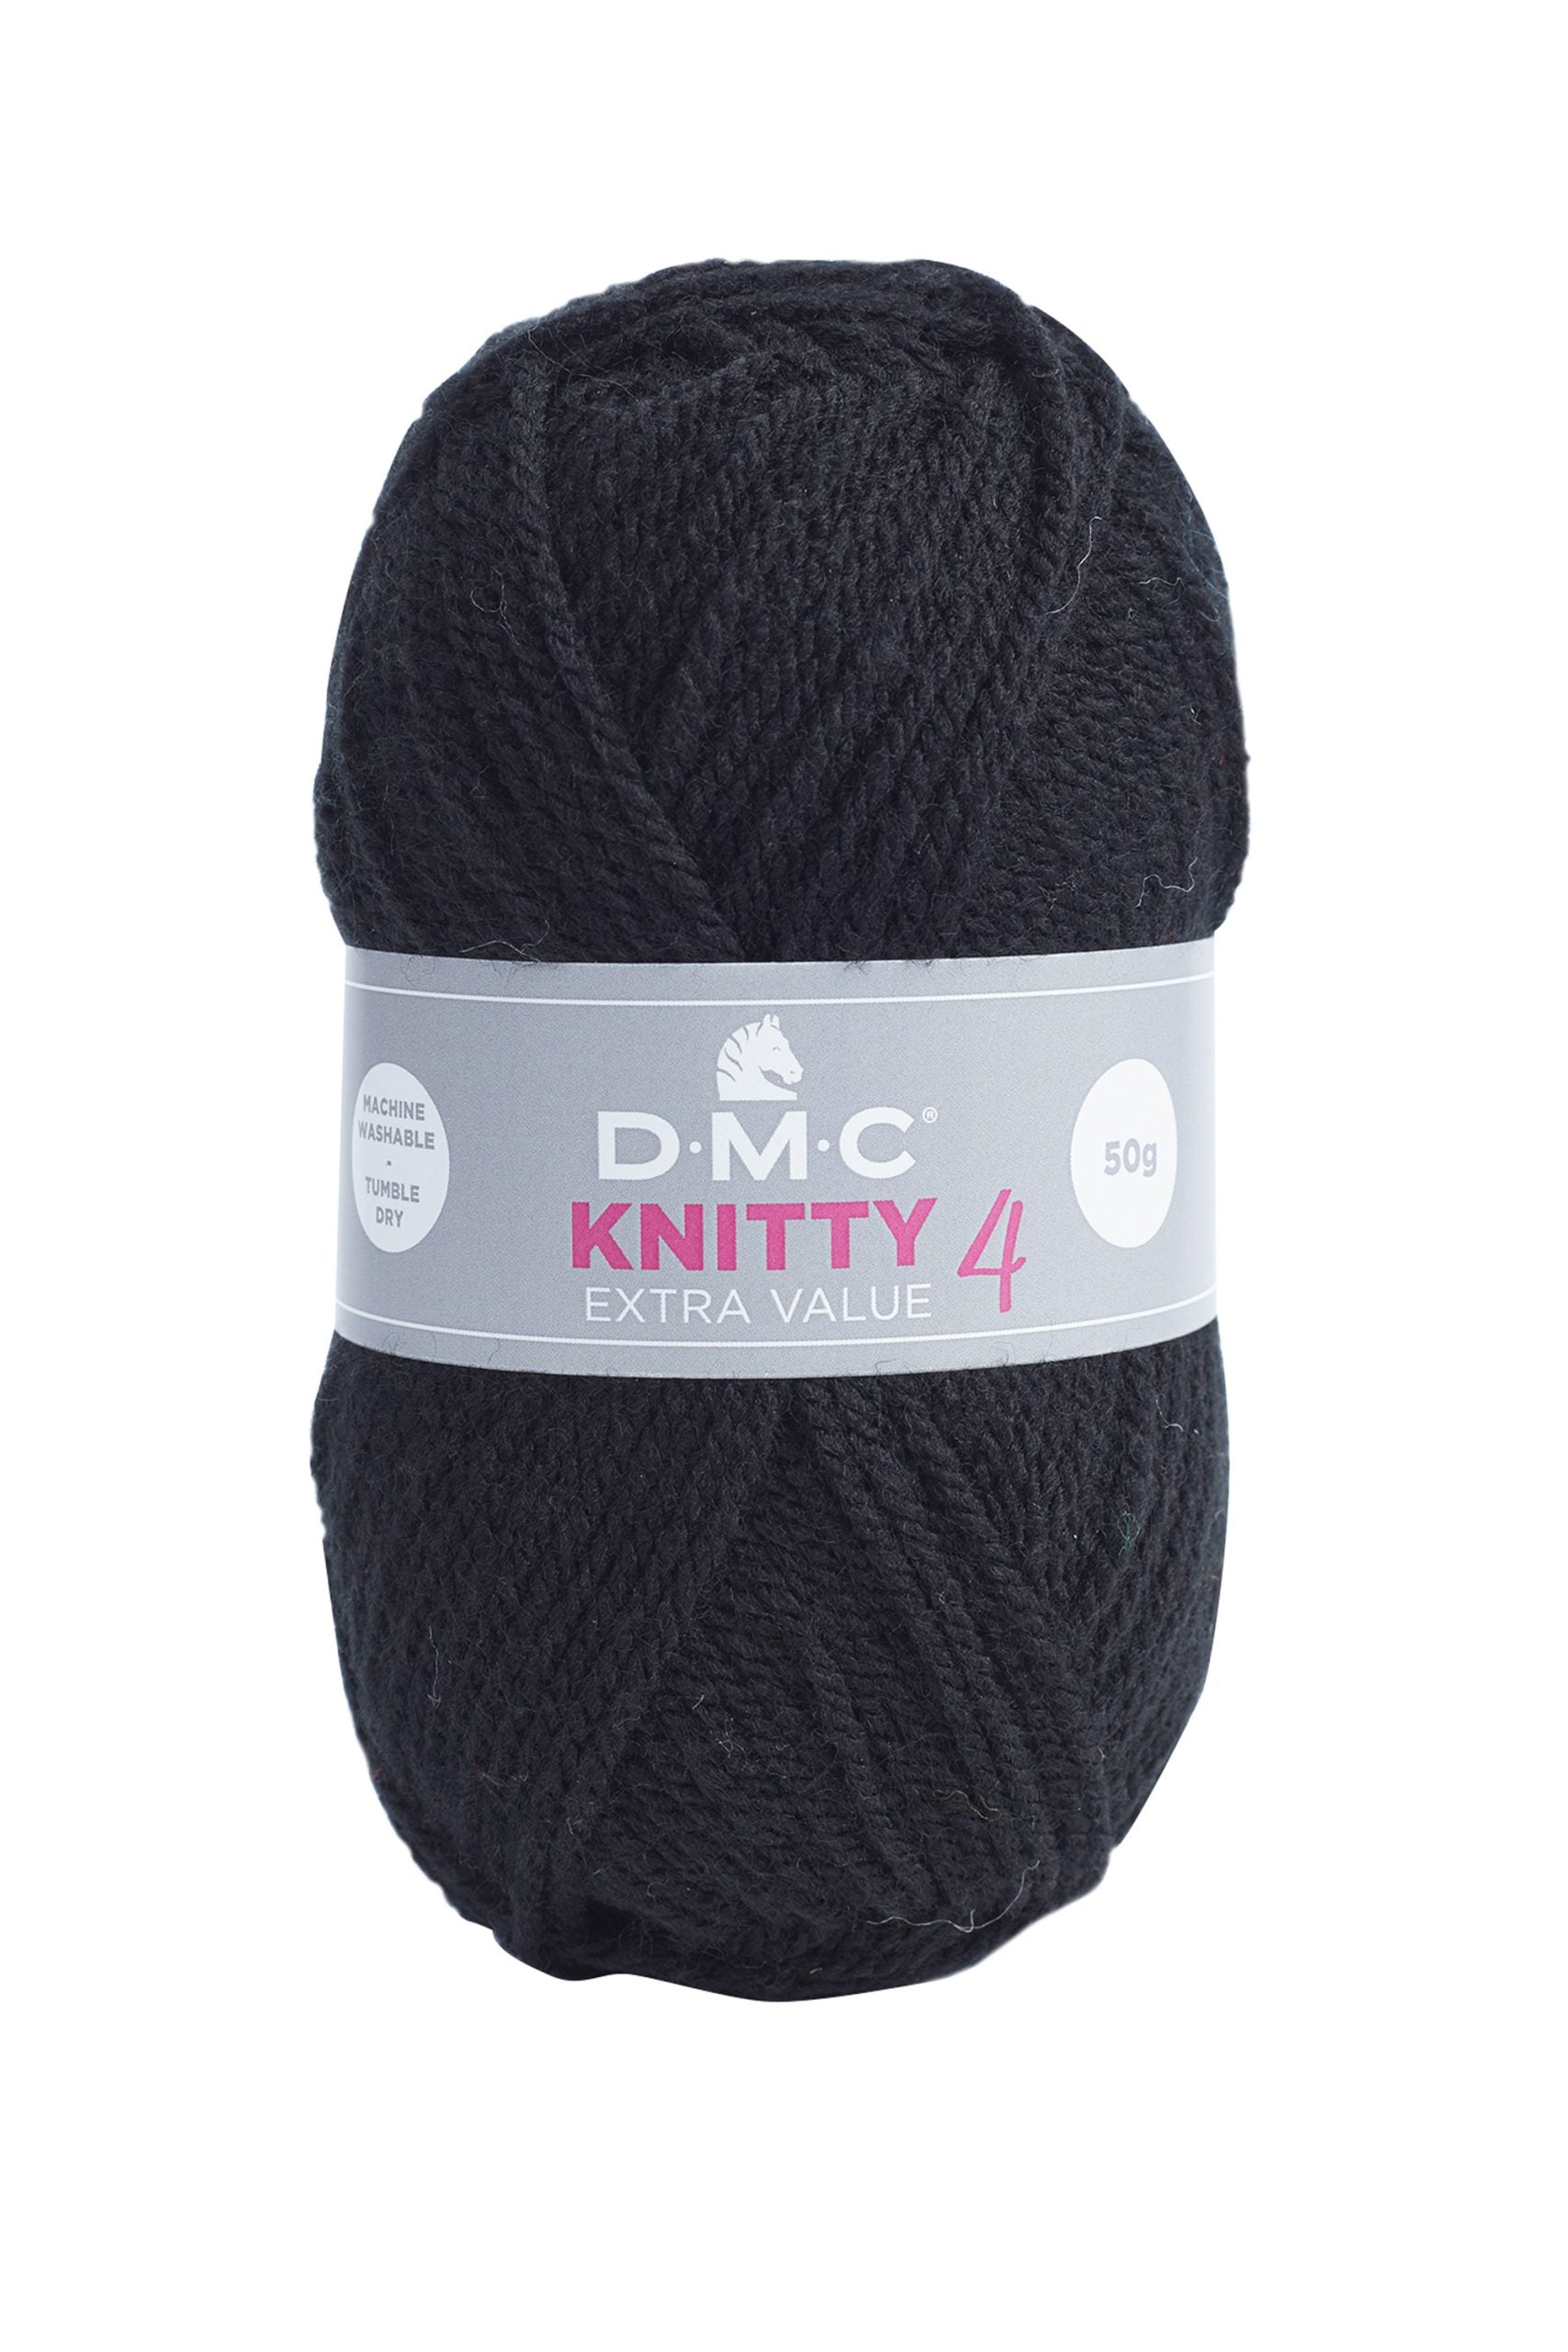 Lana Dmc Knitty 4 Colore 965